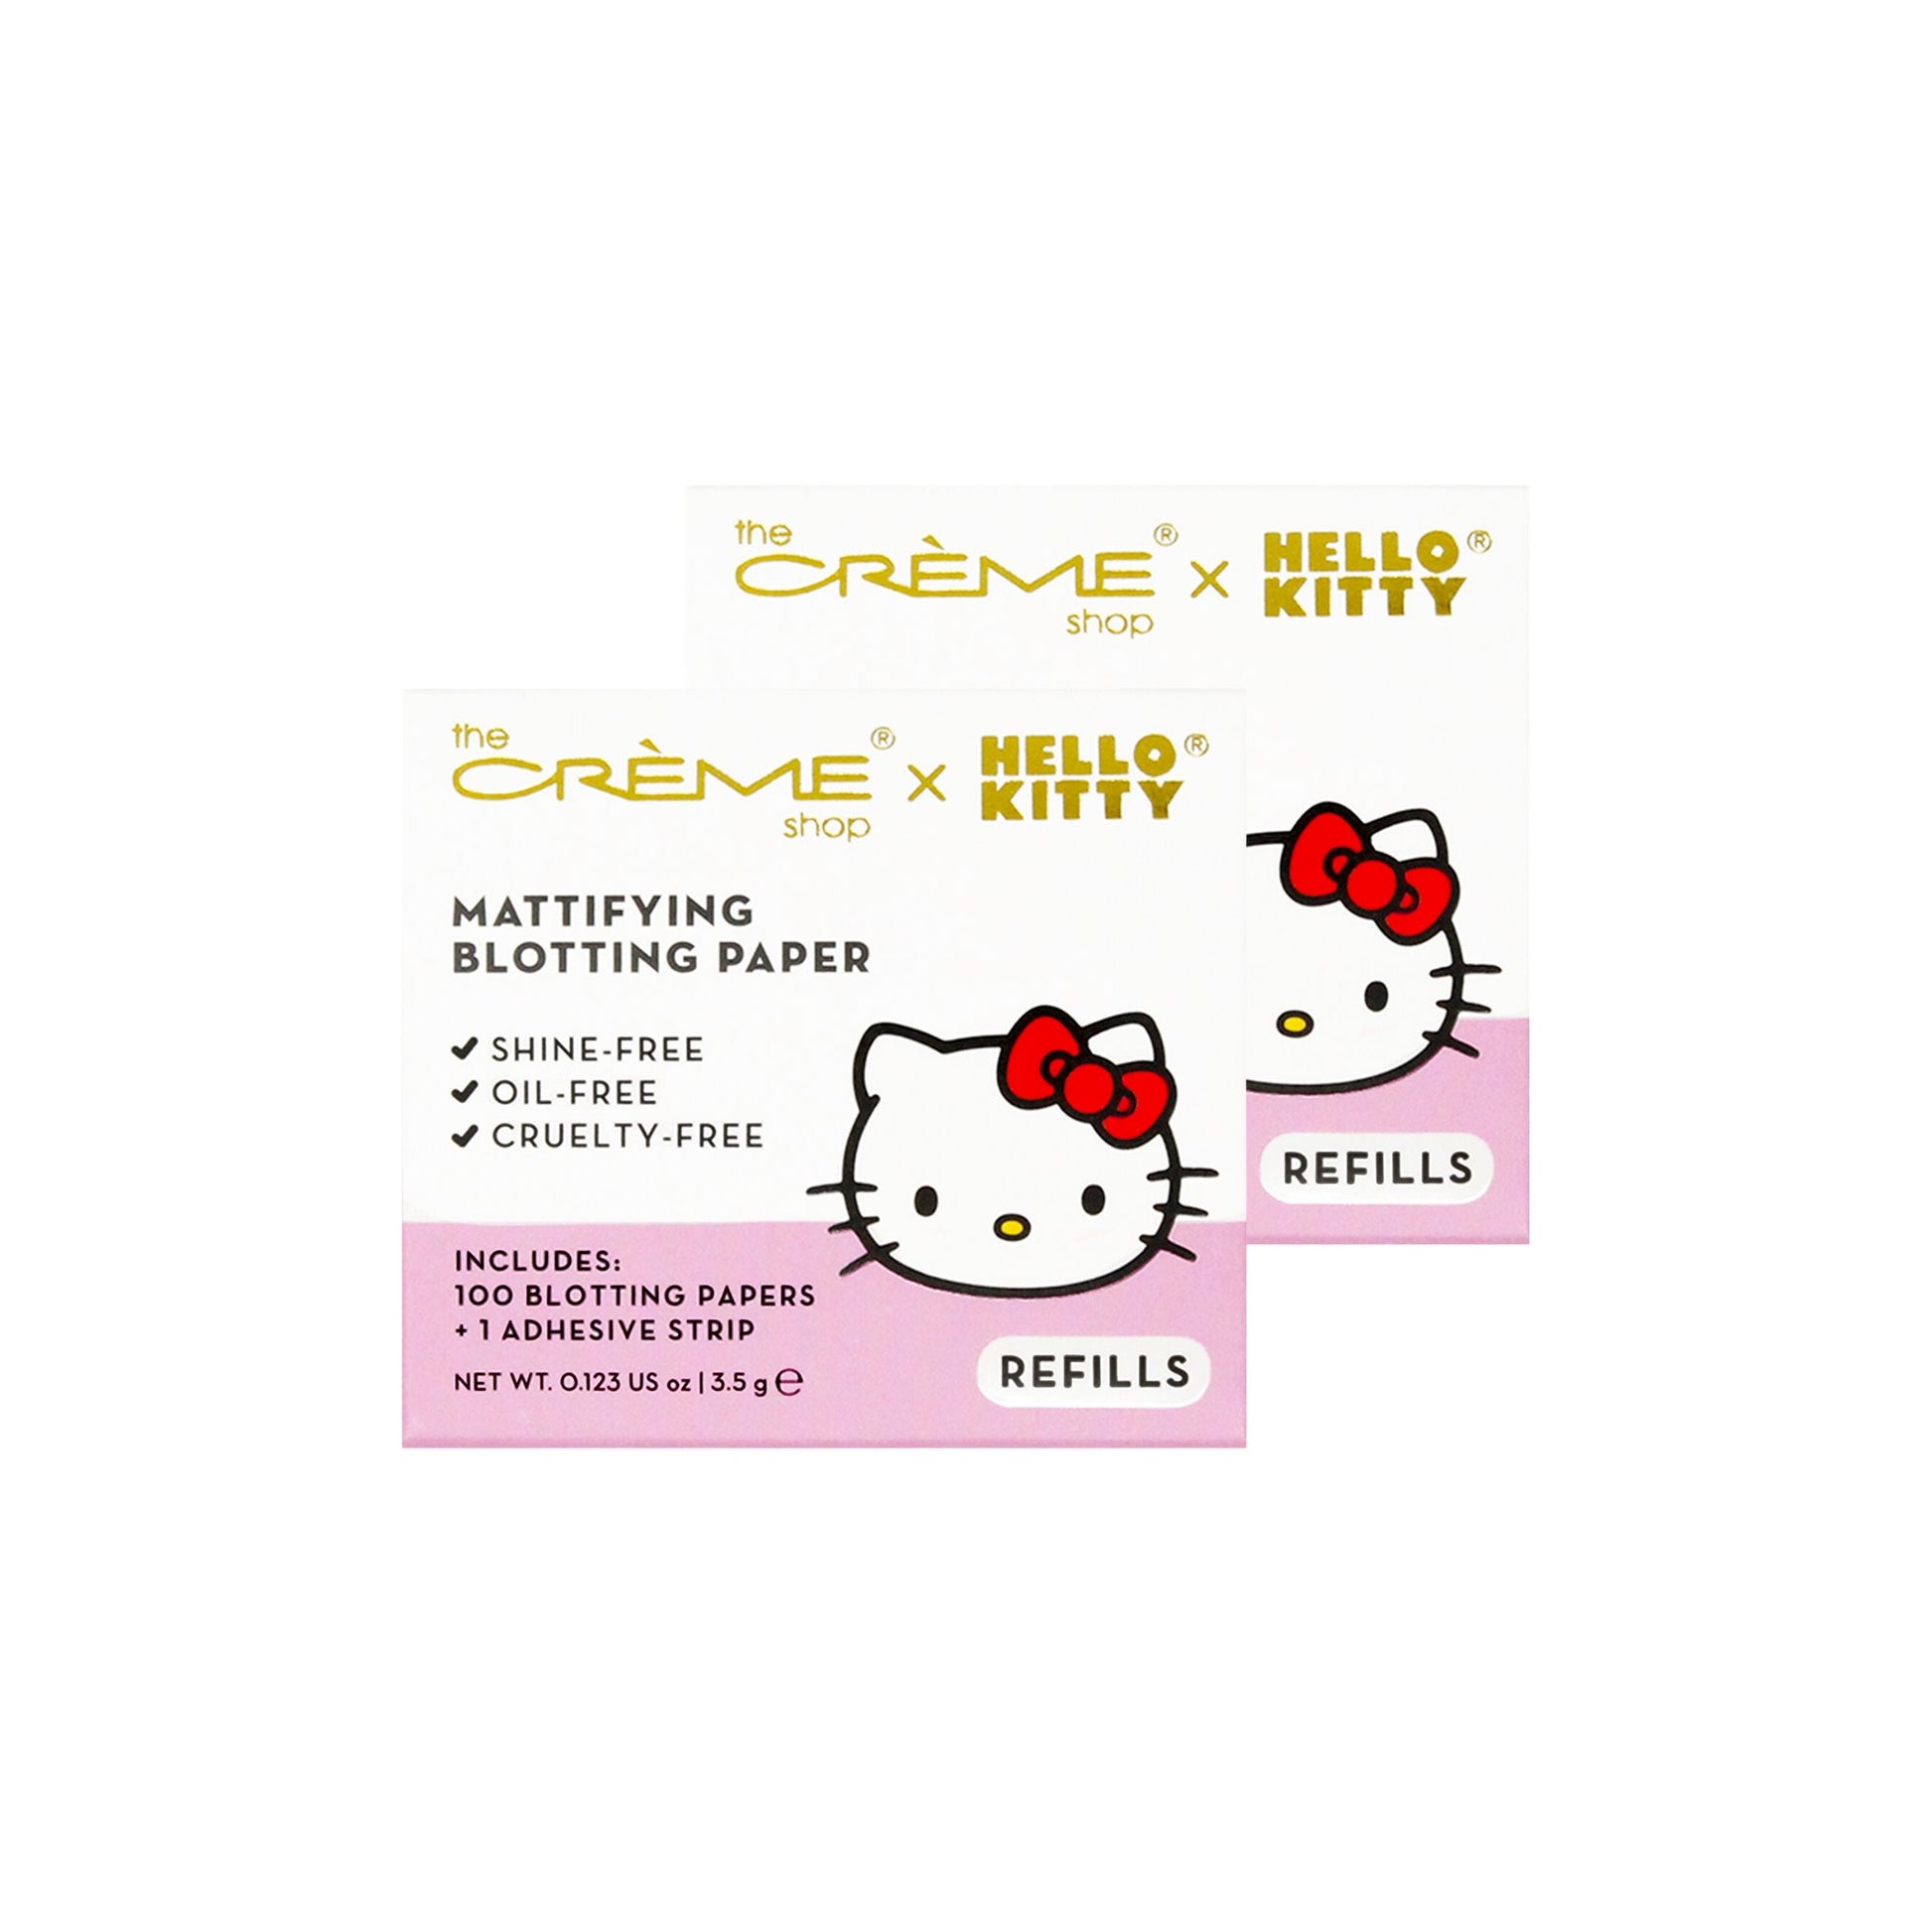 Hello Kitty Mattifying Blotting Paper Refills Blotting Paper The Crème Shop x Sanrio 2 Pack (Save $2.00) 